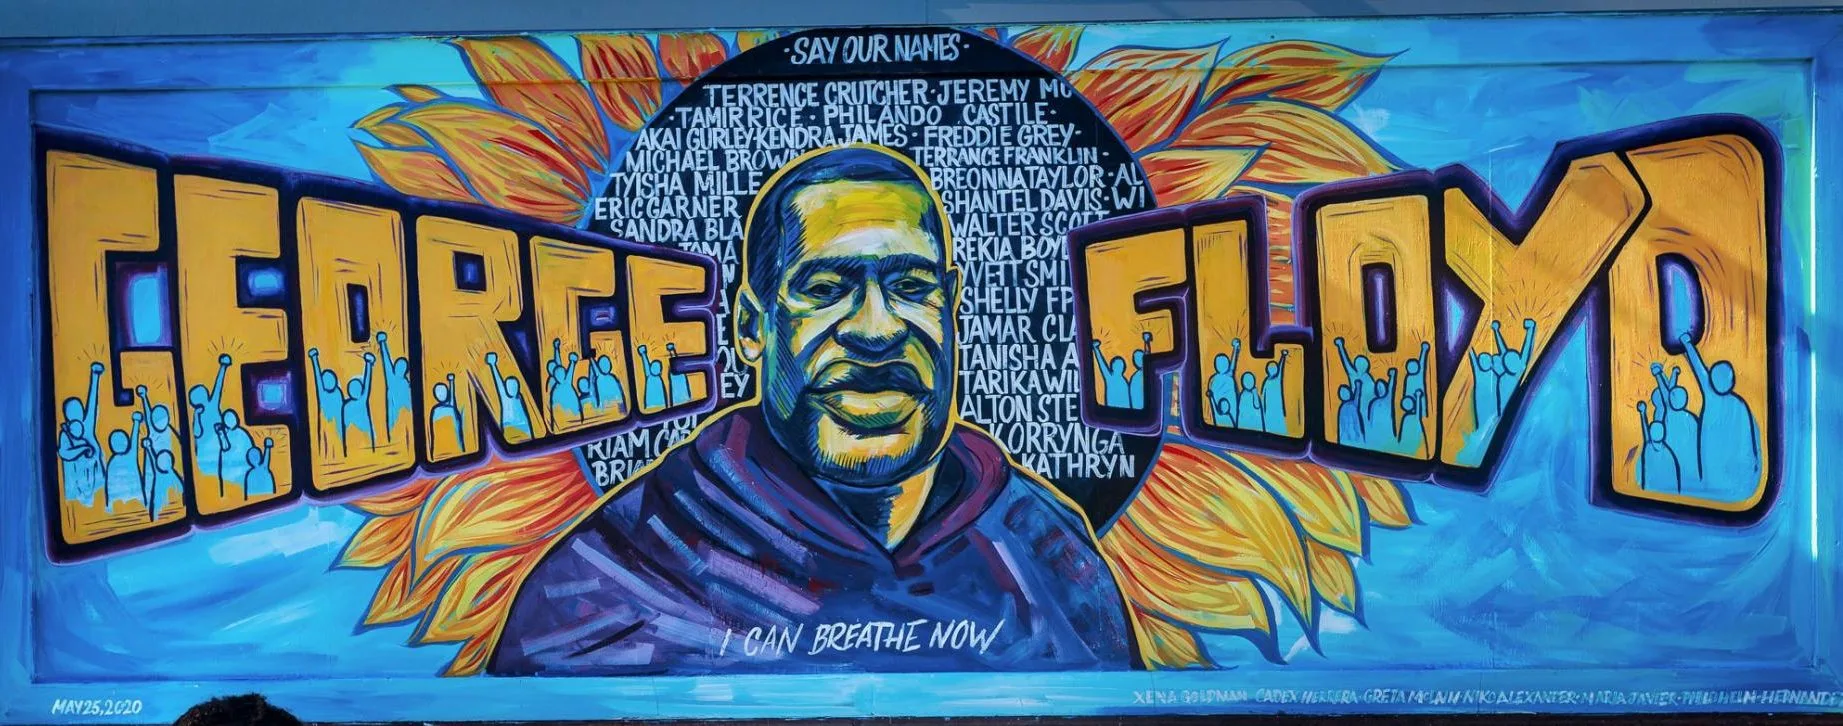 george floyd mural artwork in Minneapolis black justice and equality